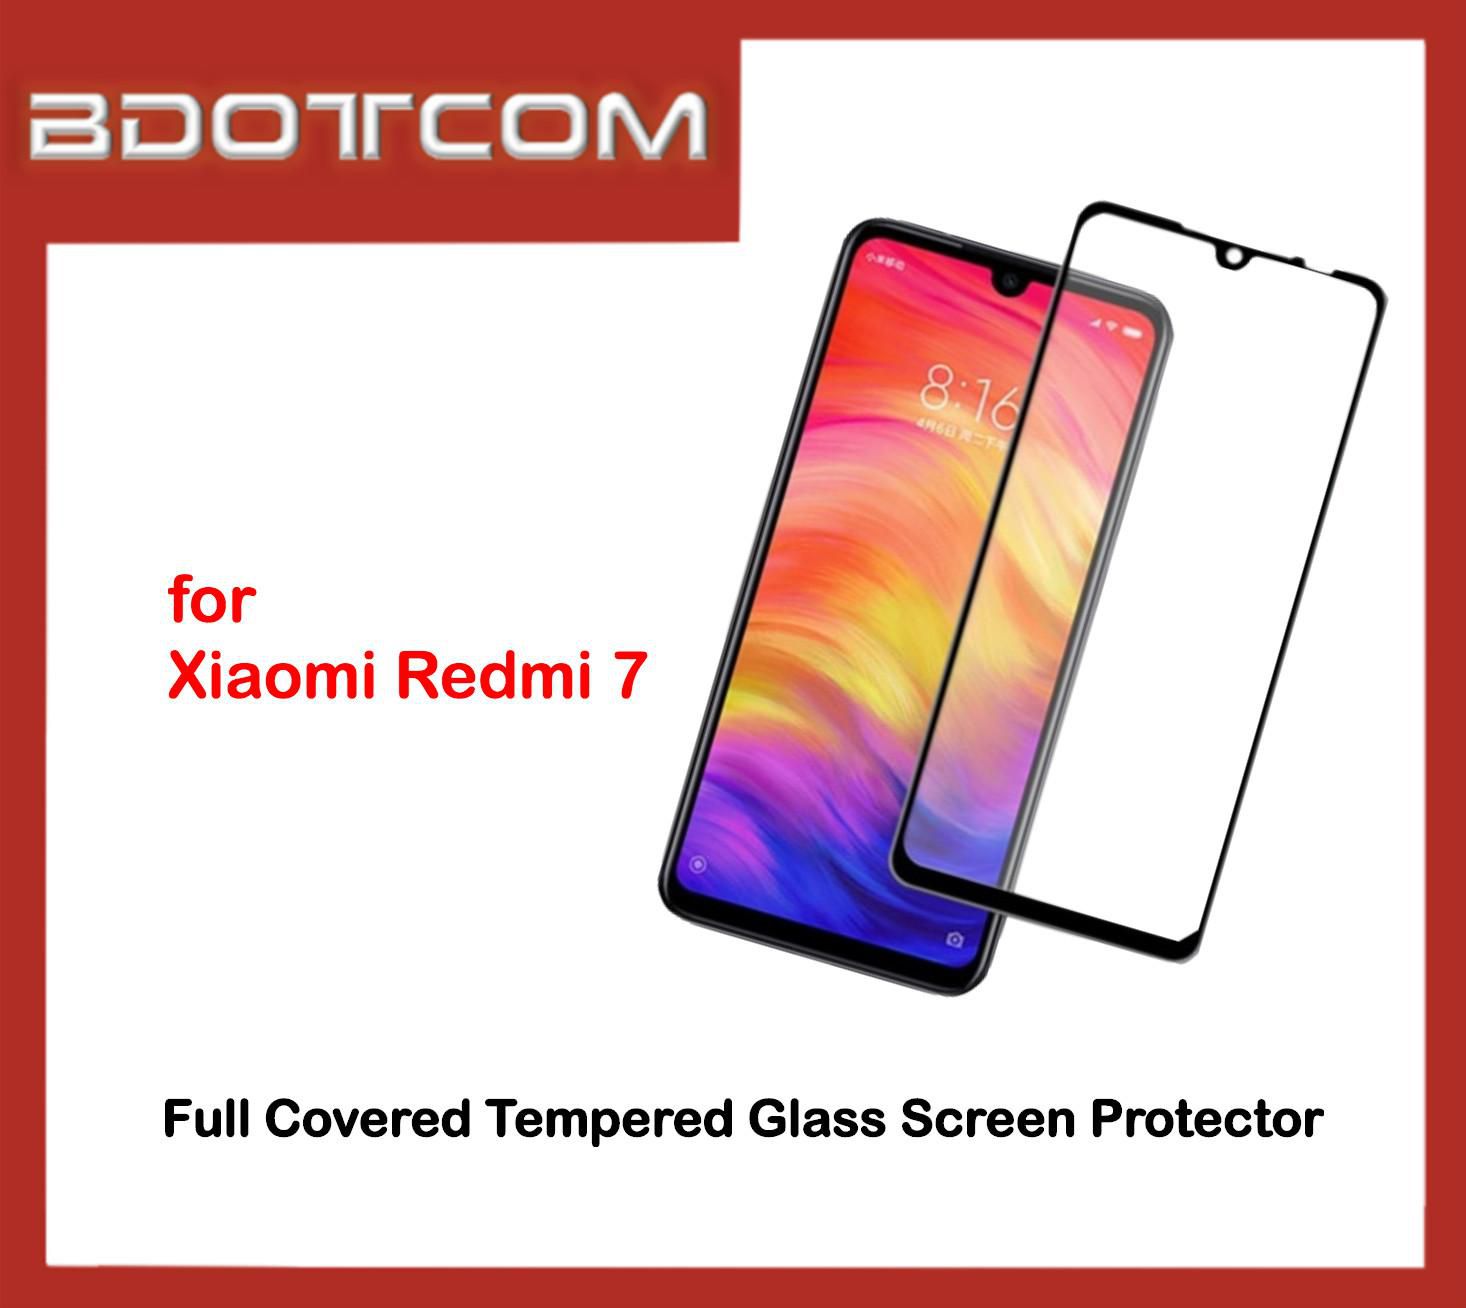 Bdotcom Full Covered Tempered Glass Screen Protector for Xiaomi Redmi 7 (Black)